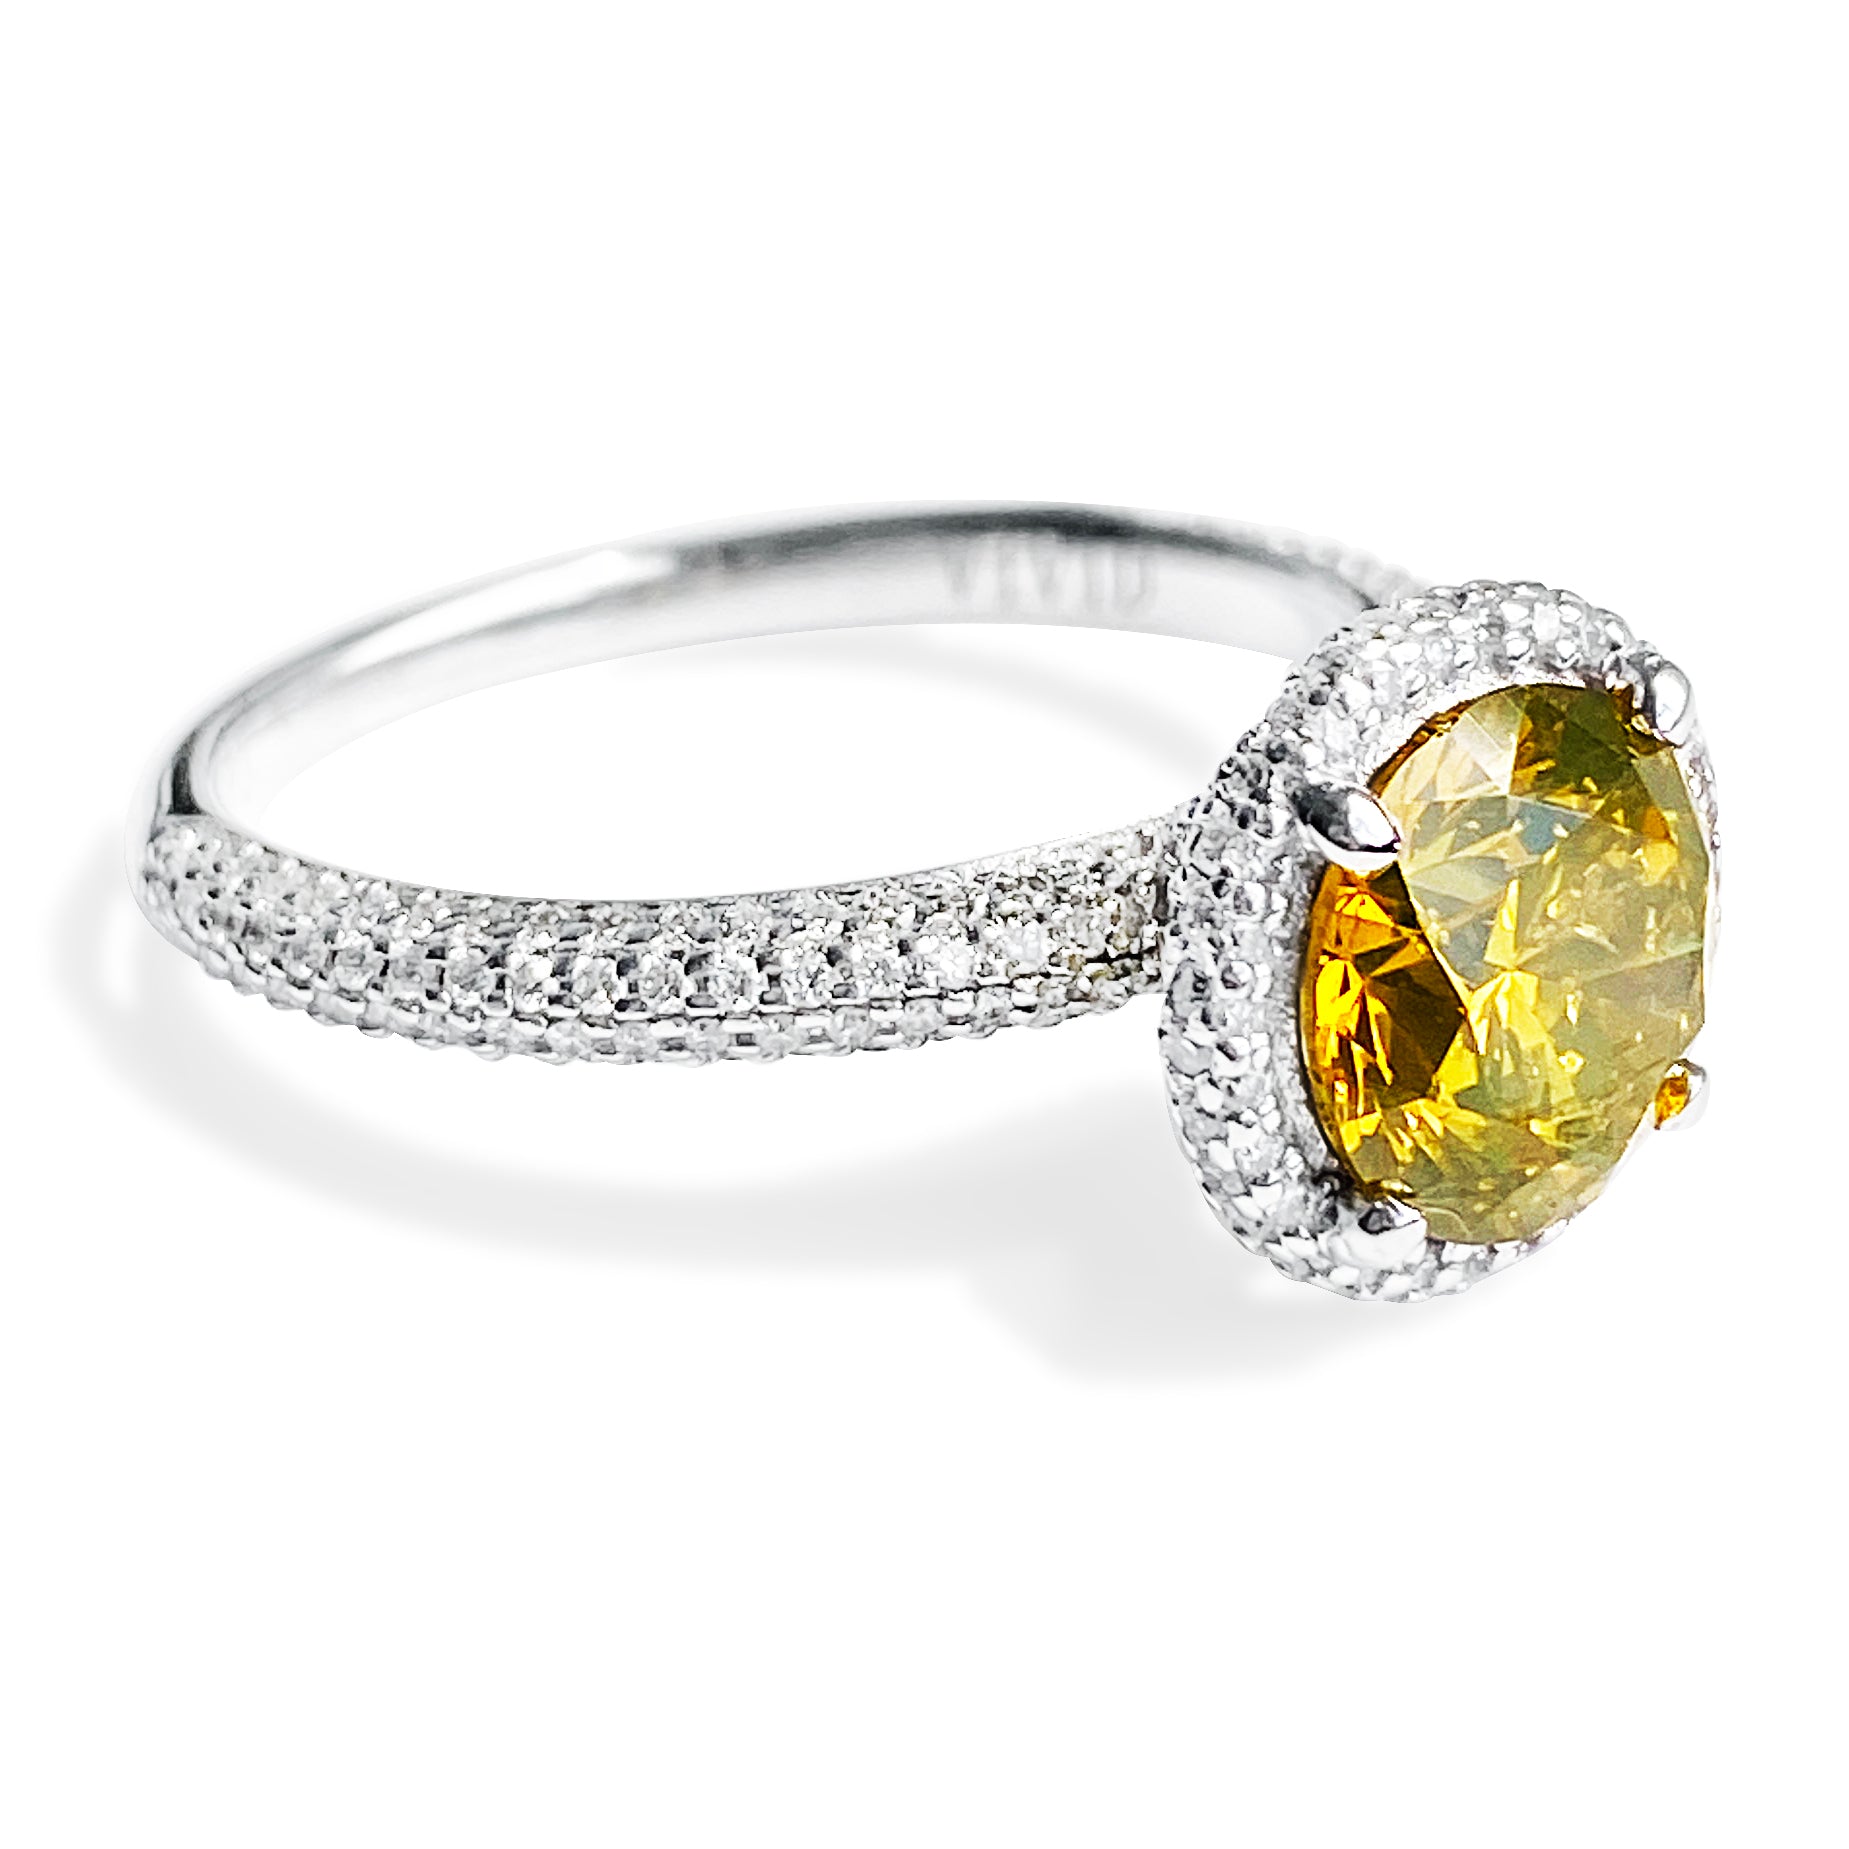 1.89 Carat Fancy Yellow Round Brilliant Diamond Halo Ring